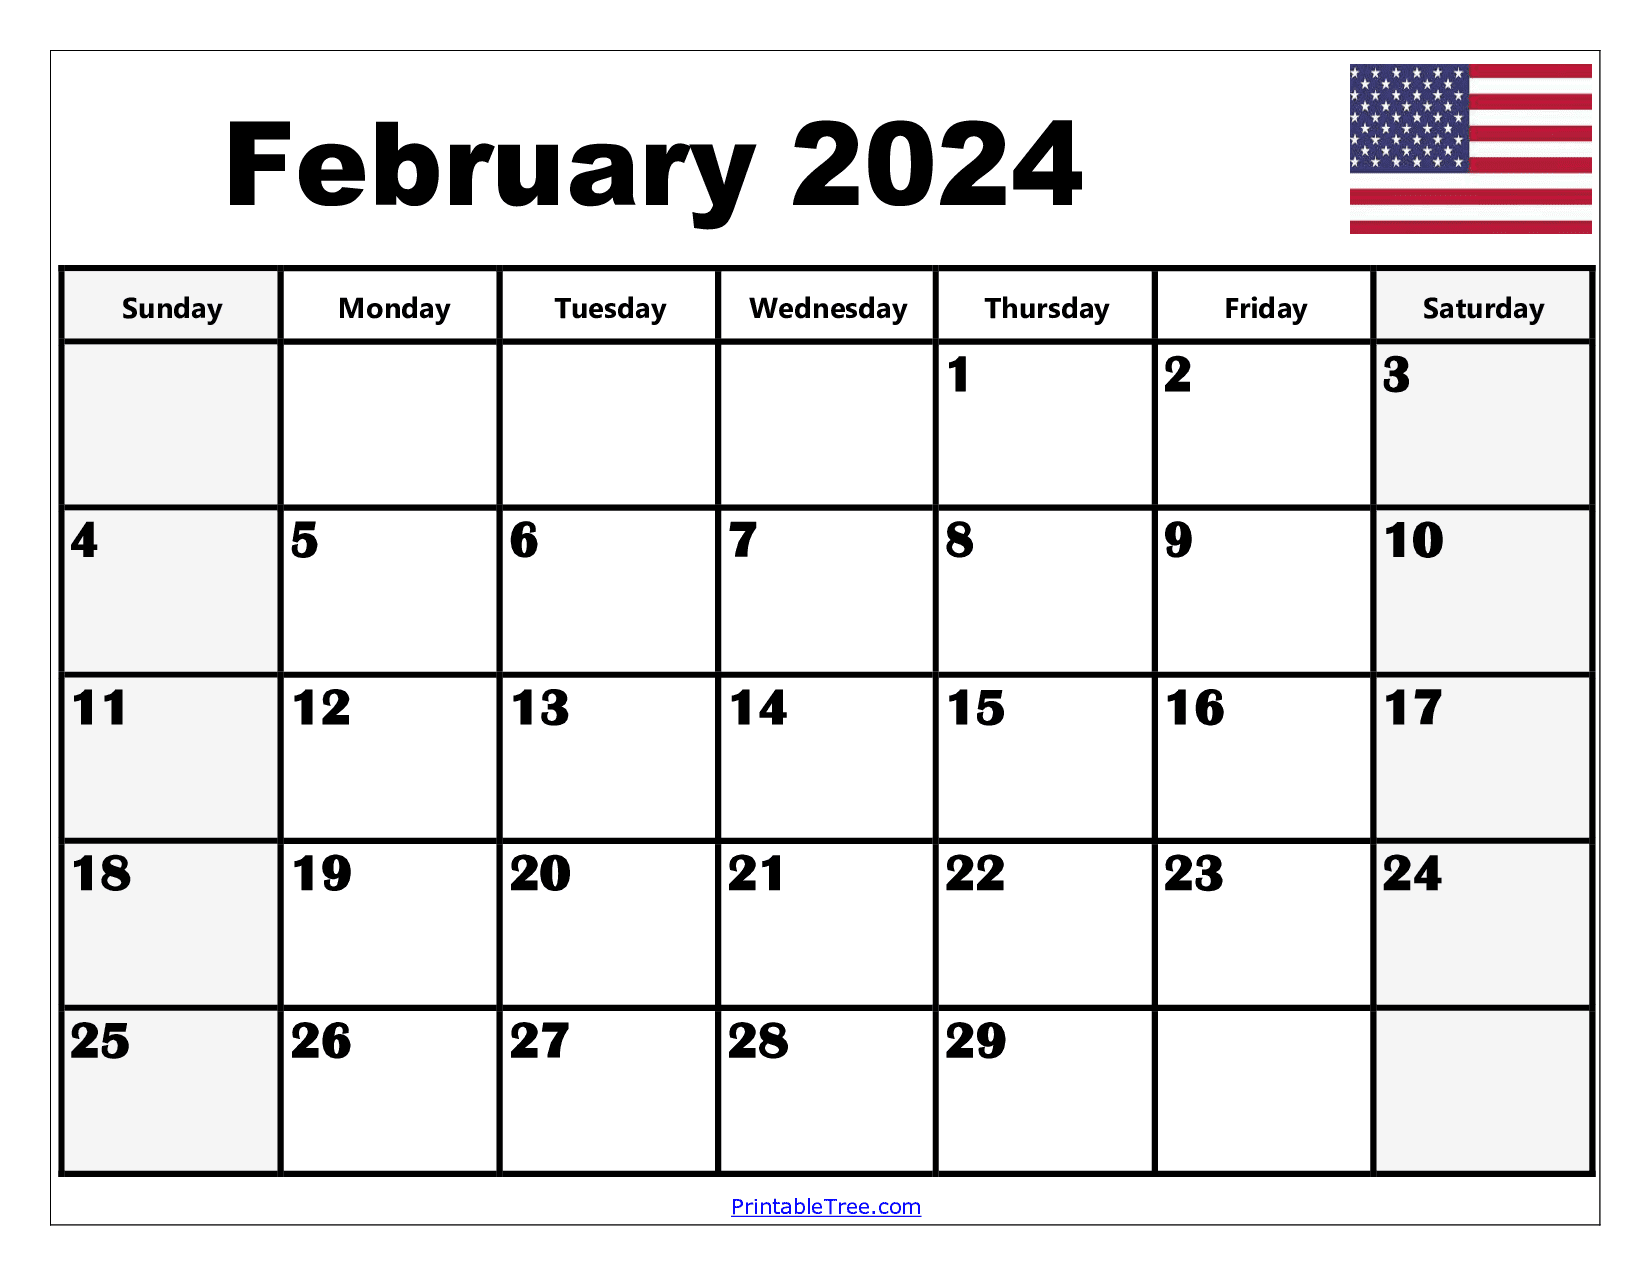 February 2024 Calendar Printable Pdf Template With Holidays for February 2024 Free Printable Calendar With Holidays